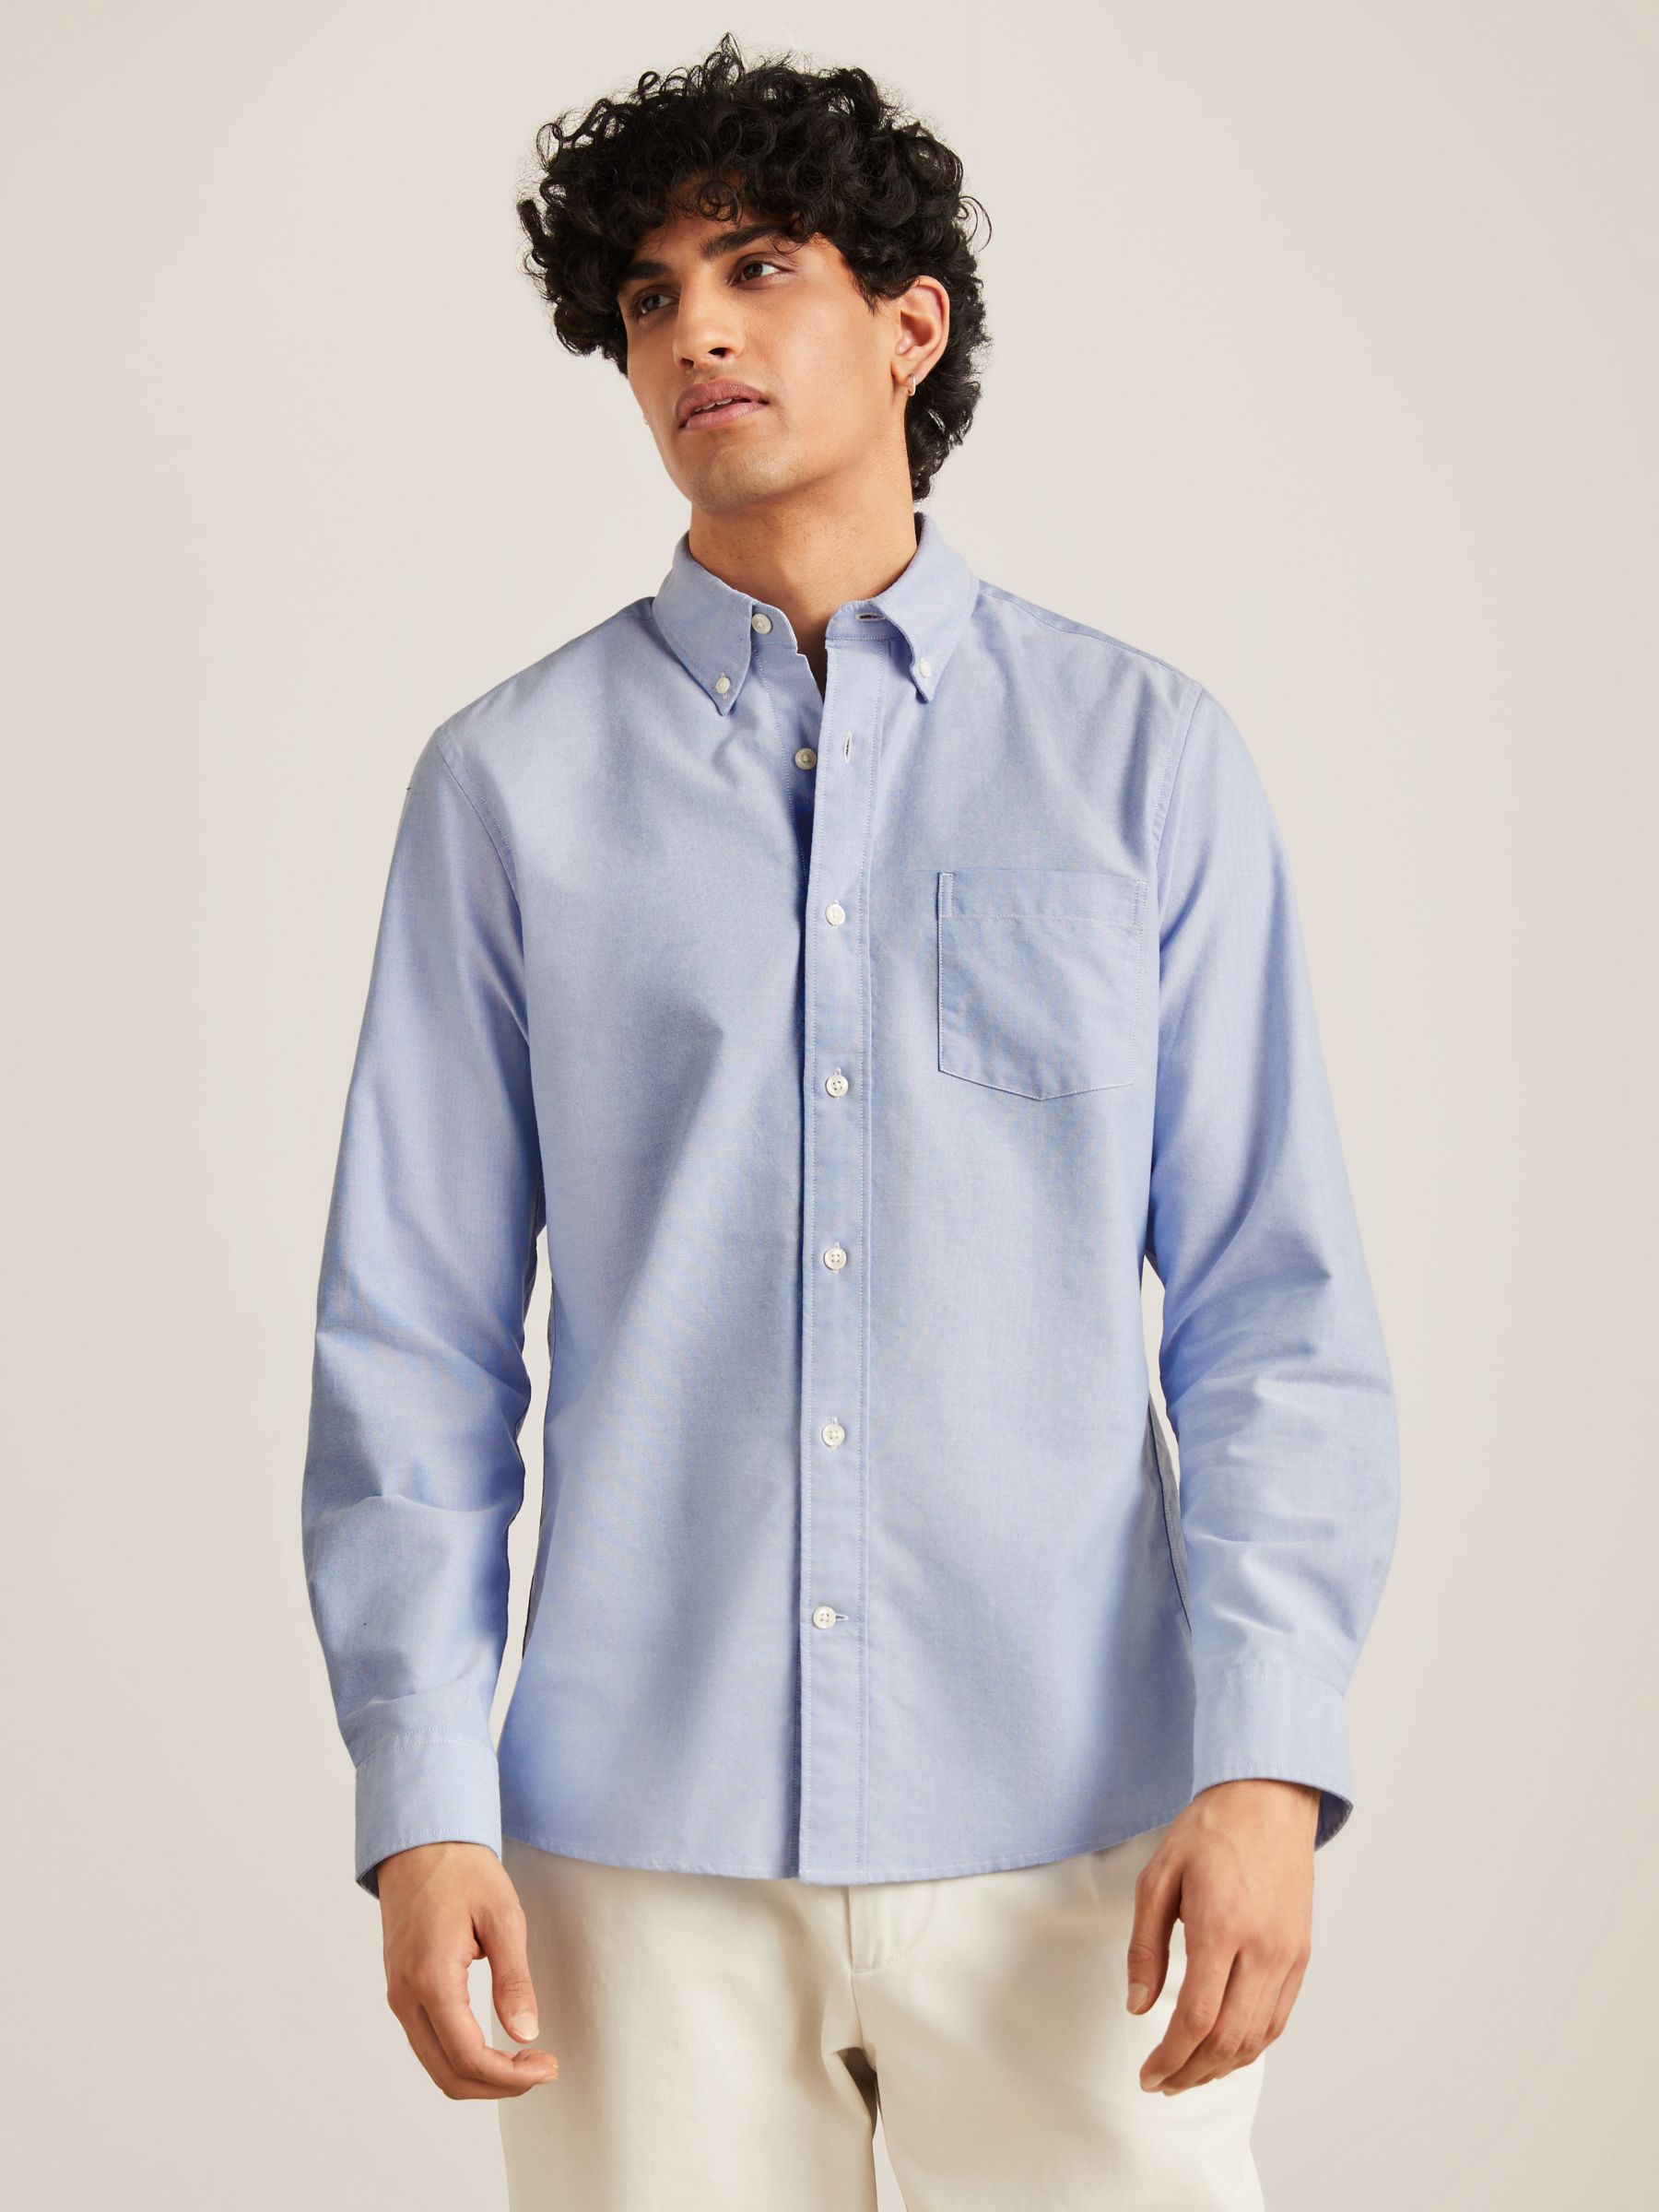 John Lewis Regular Fit Cotton Oxford Button Down Shirt, Blue, S